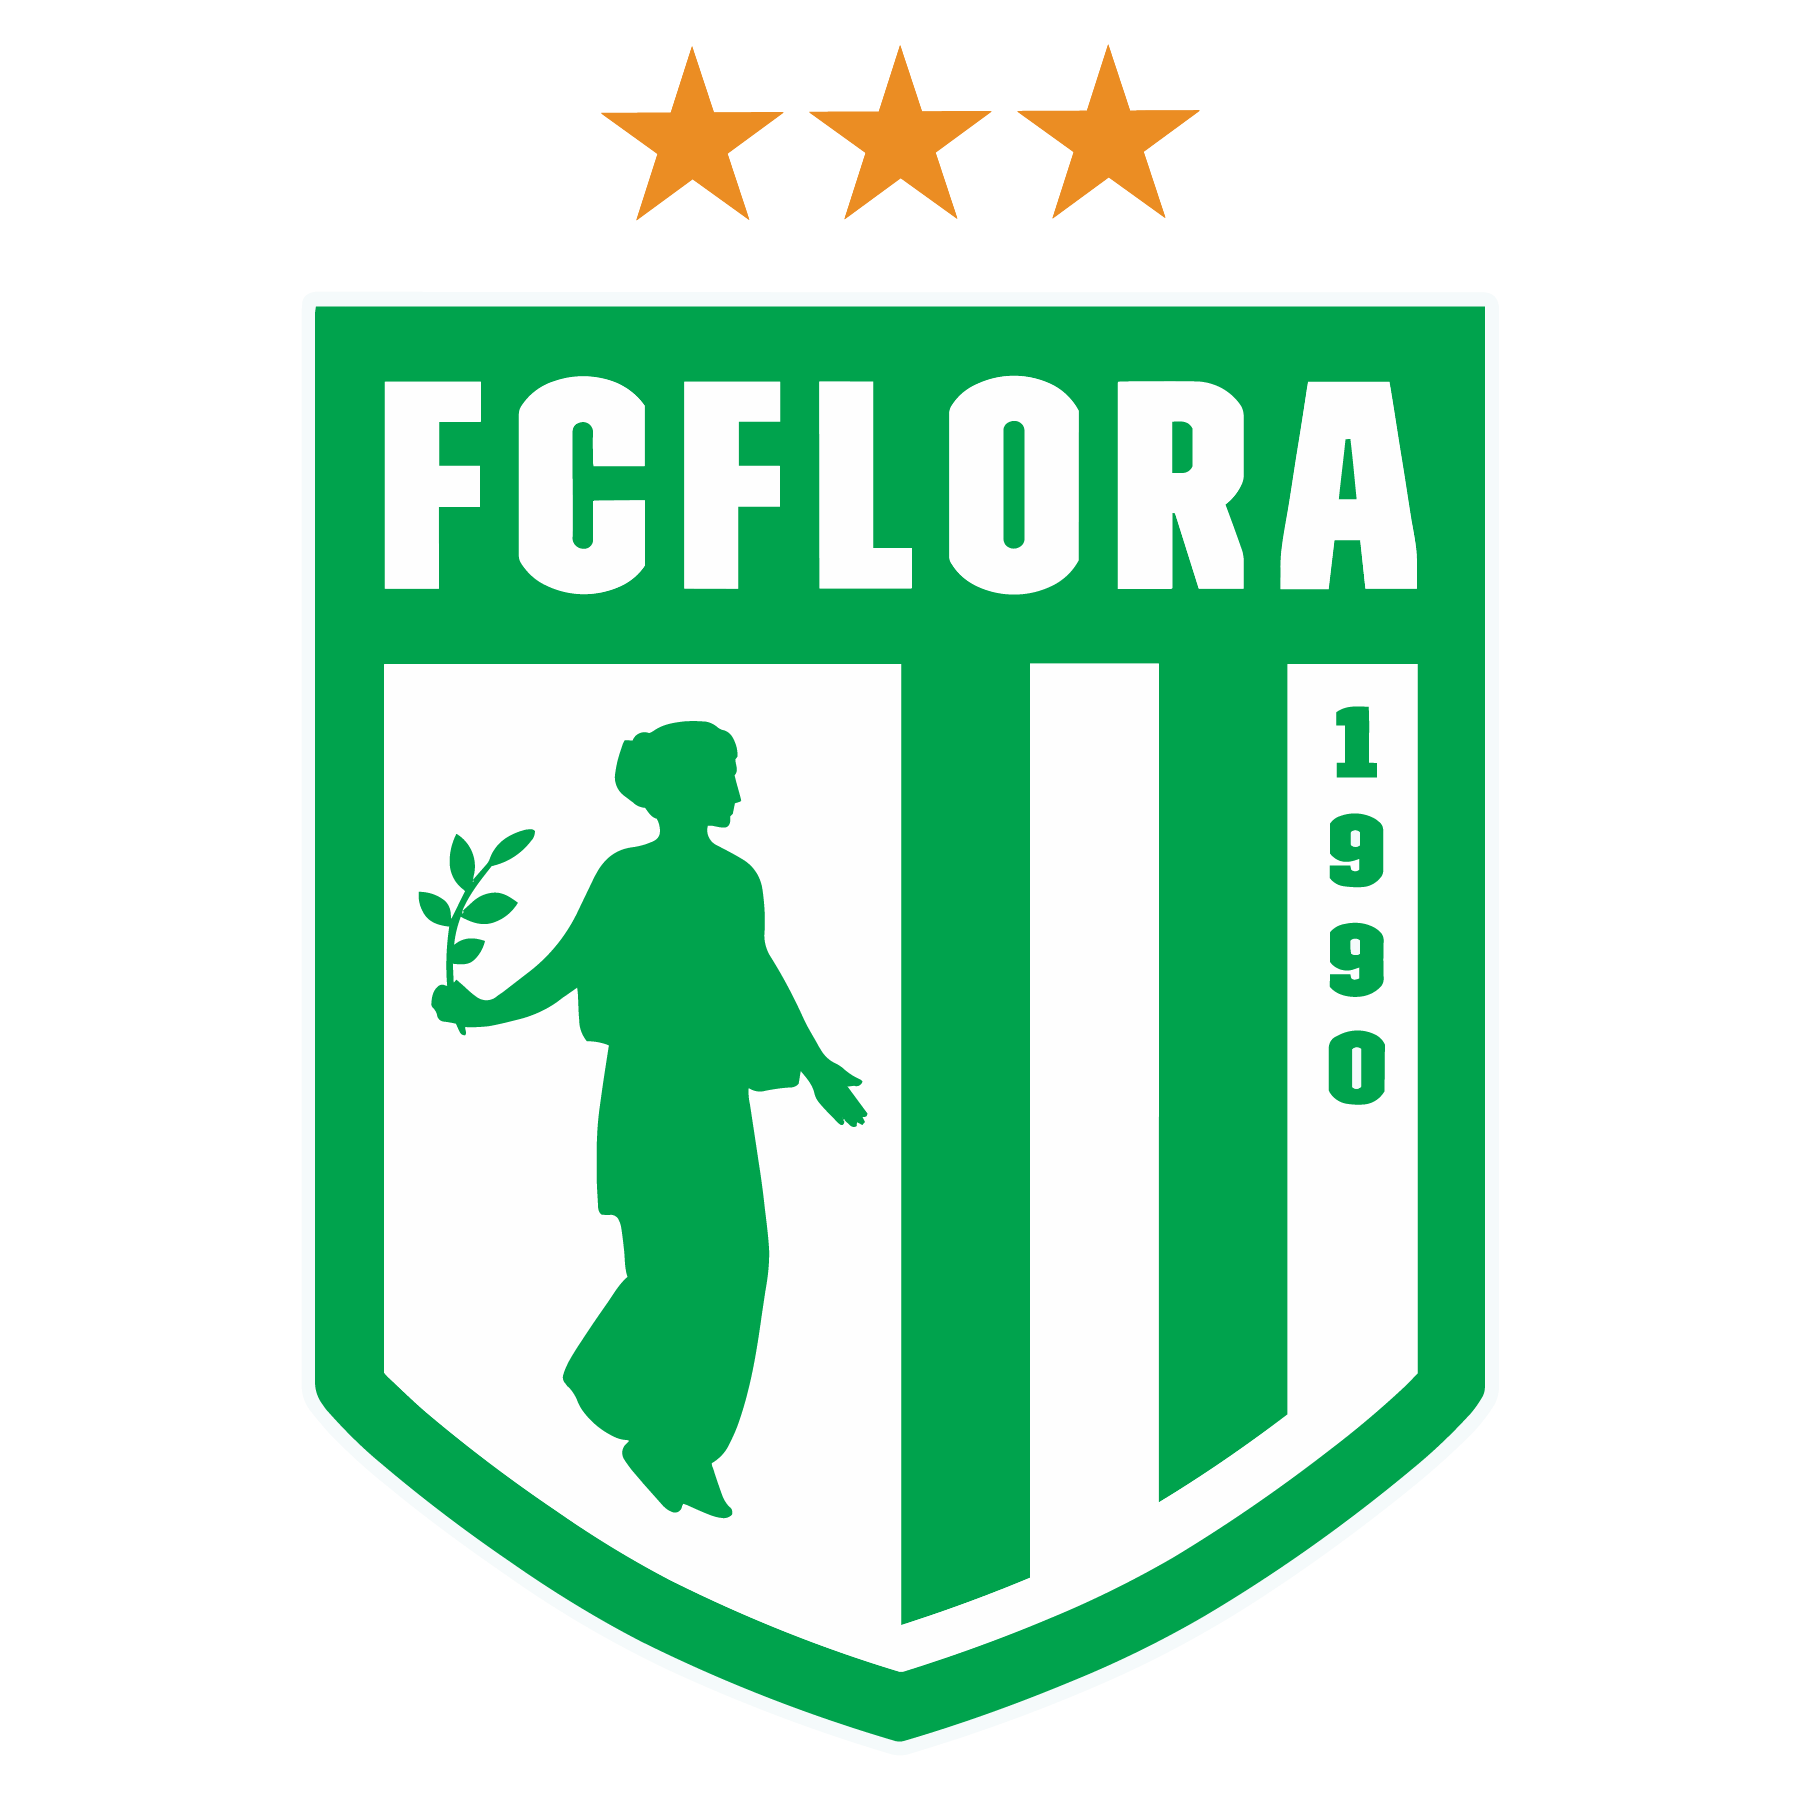 FC FLORA CMYK 91 0 100 0 VECTOR TRUKK 01